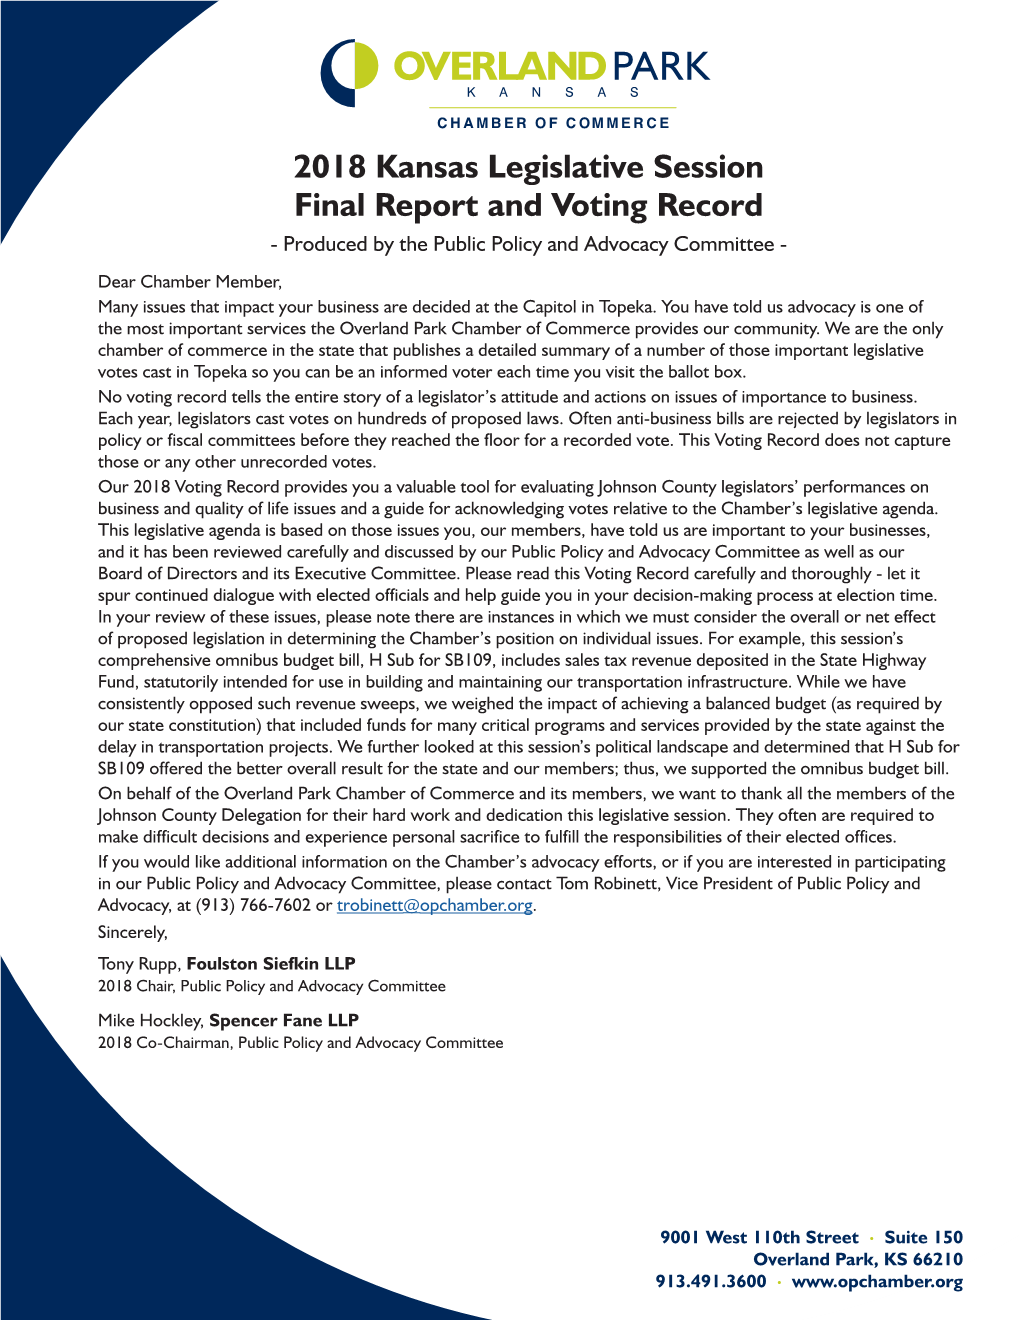 2018 Kansas Legislative Session Final Report and Voting Record